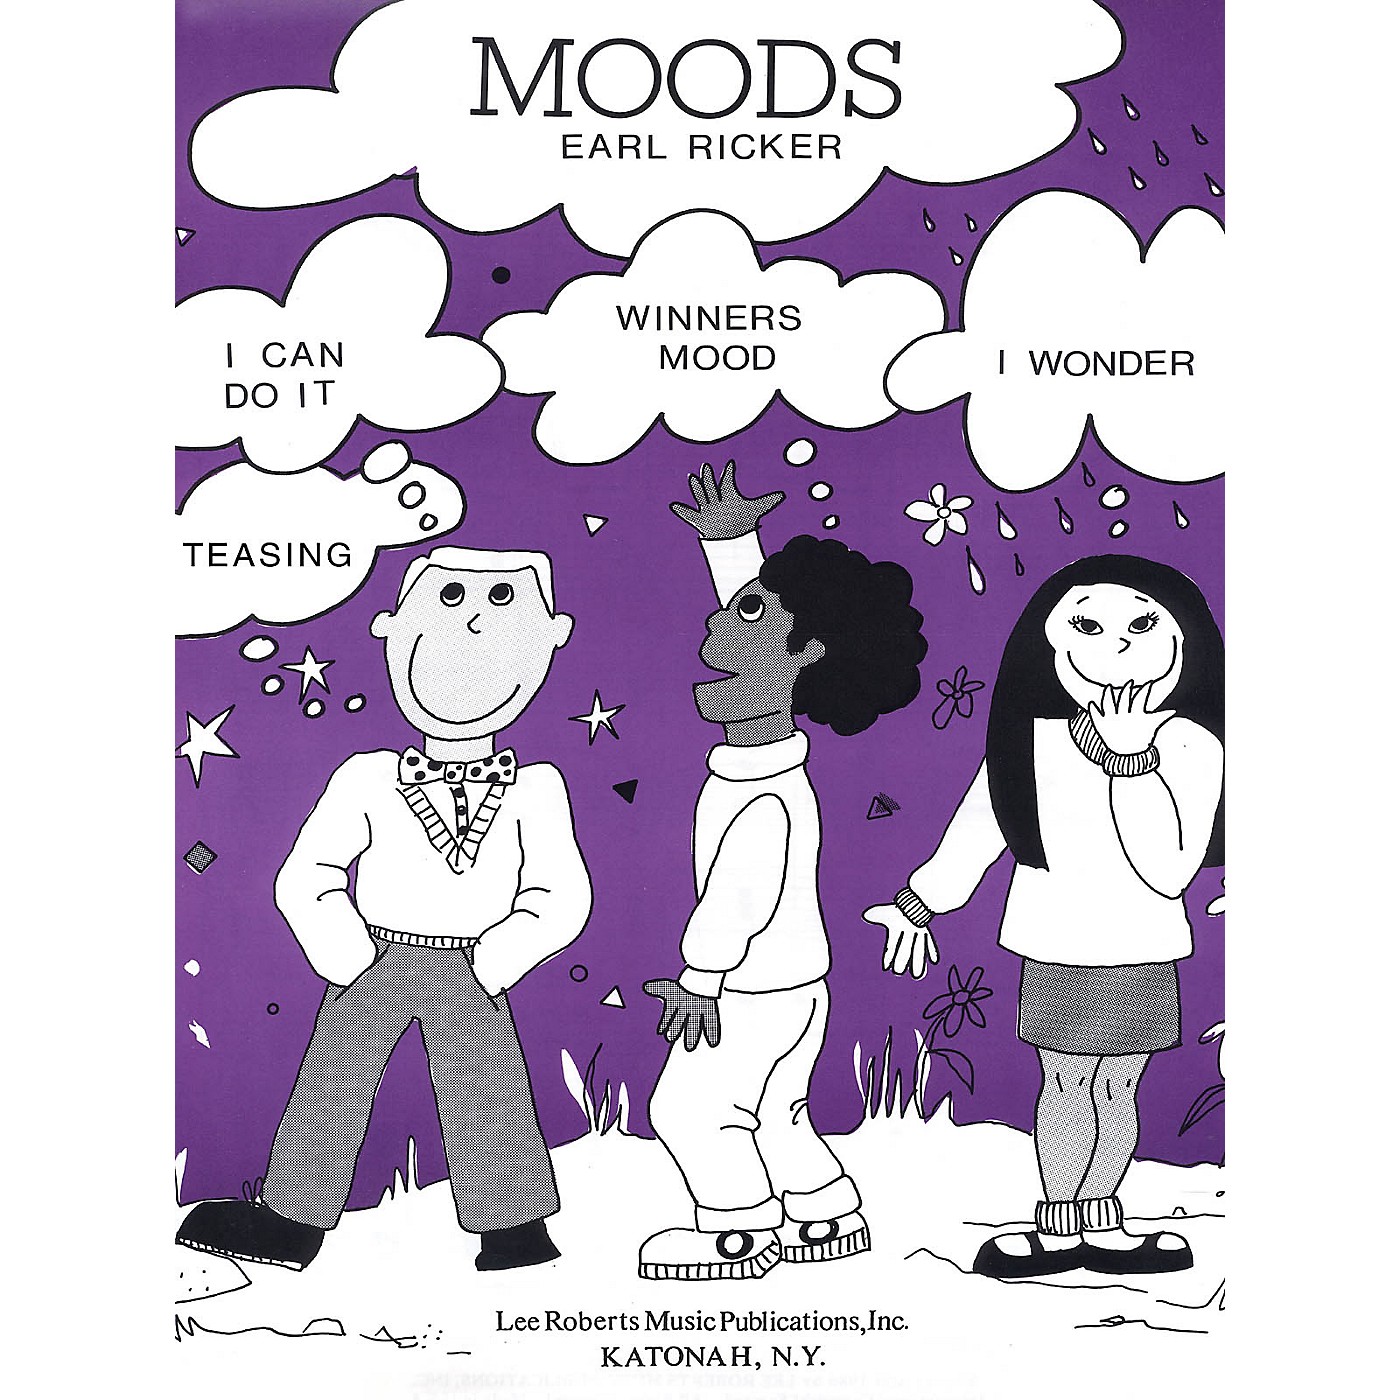 Lee Roberts Moods - Levels II-III, (Teasing, I Wonder, I Can Do It, Winner's Mood) Pace Piano by Earl Ricker thumbnail